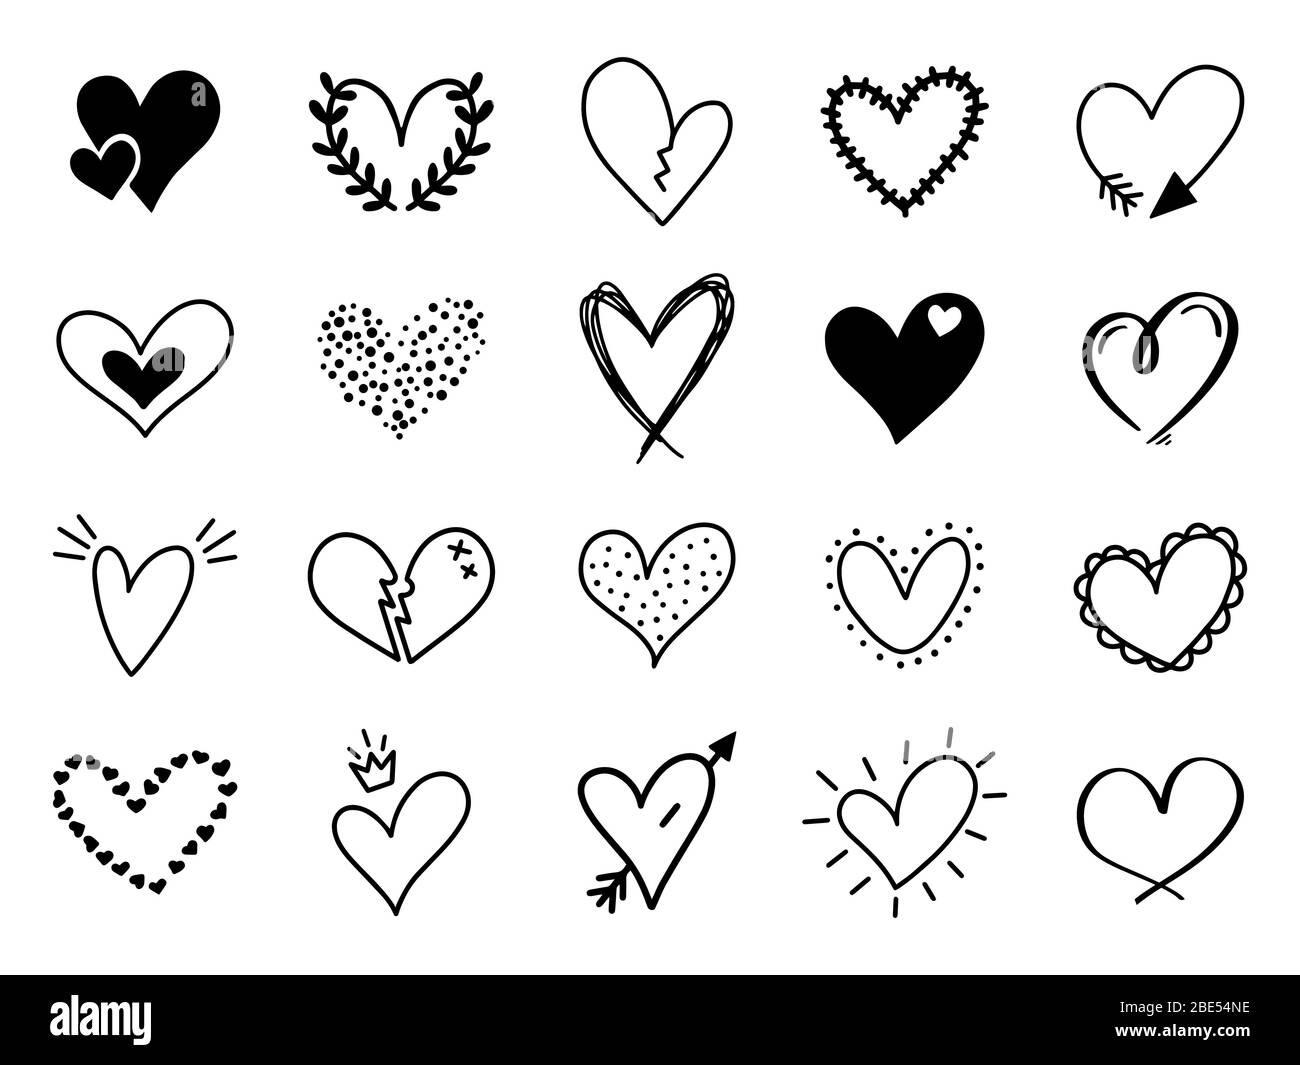 Free Vector | Set of different doodle hearts sketch design